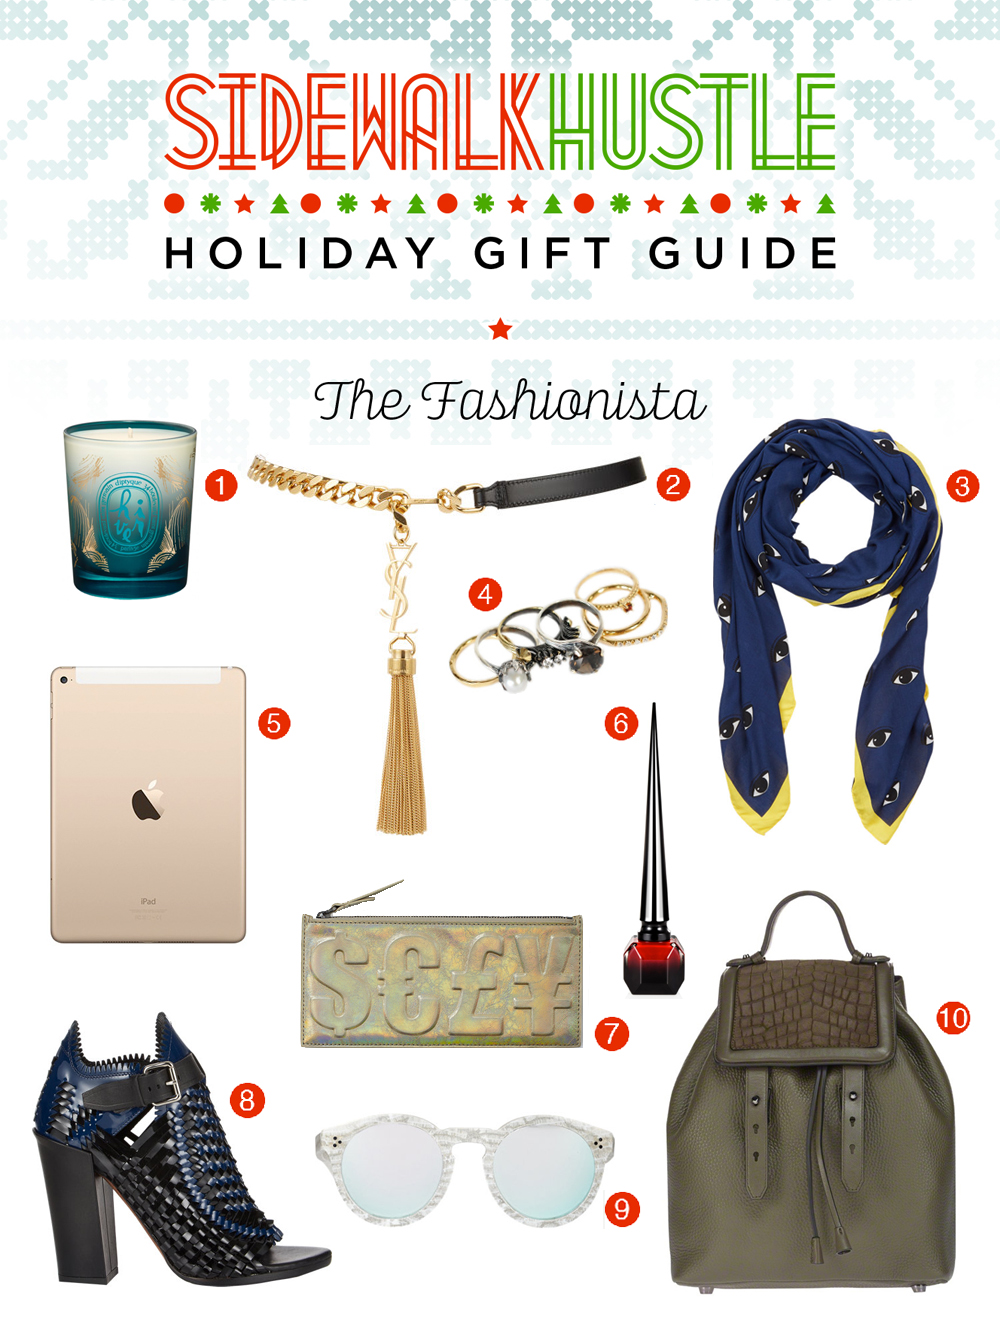 Sidewalk Hustle Holiday Gift Guide 2014 - Fashionista